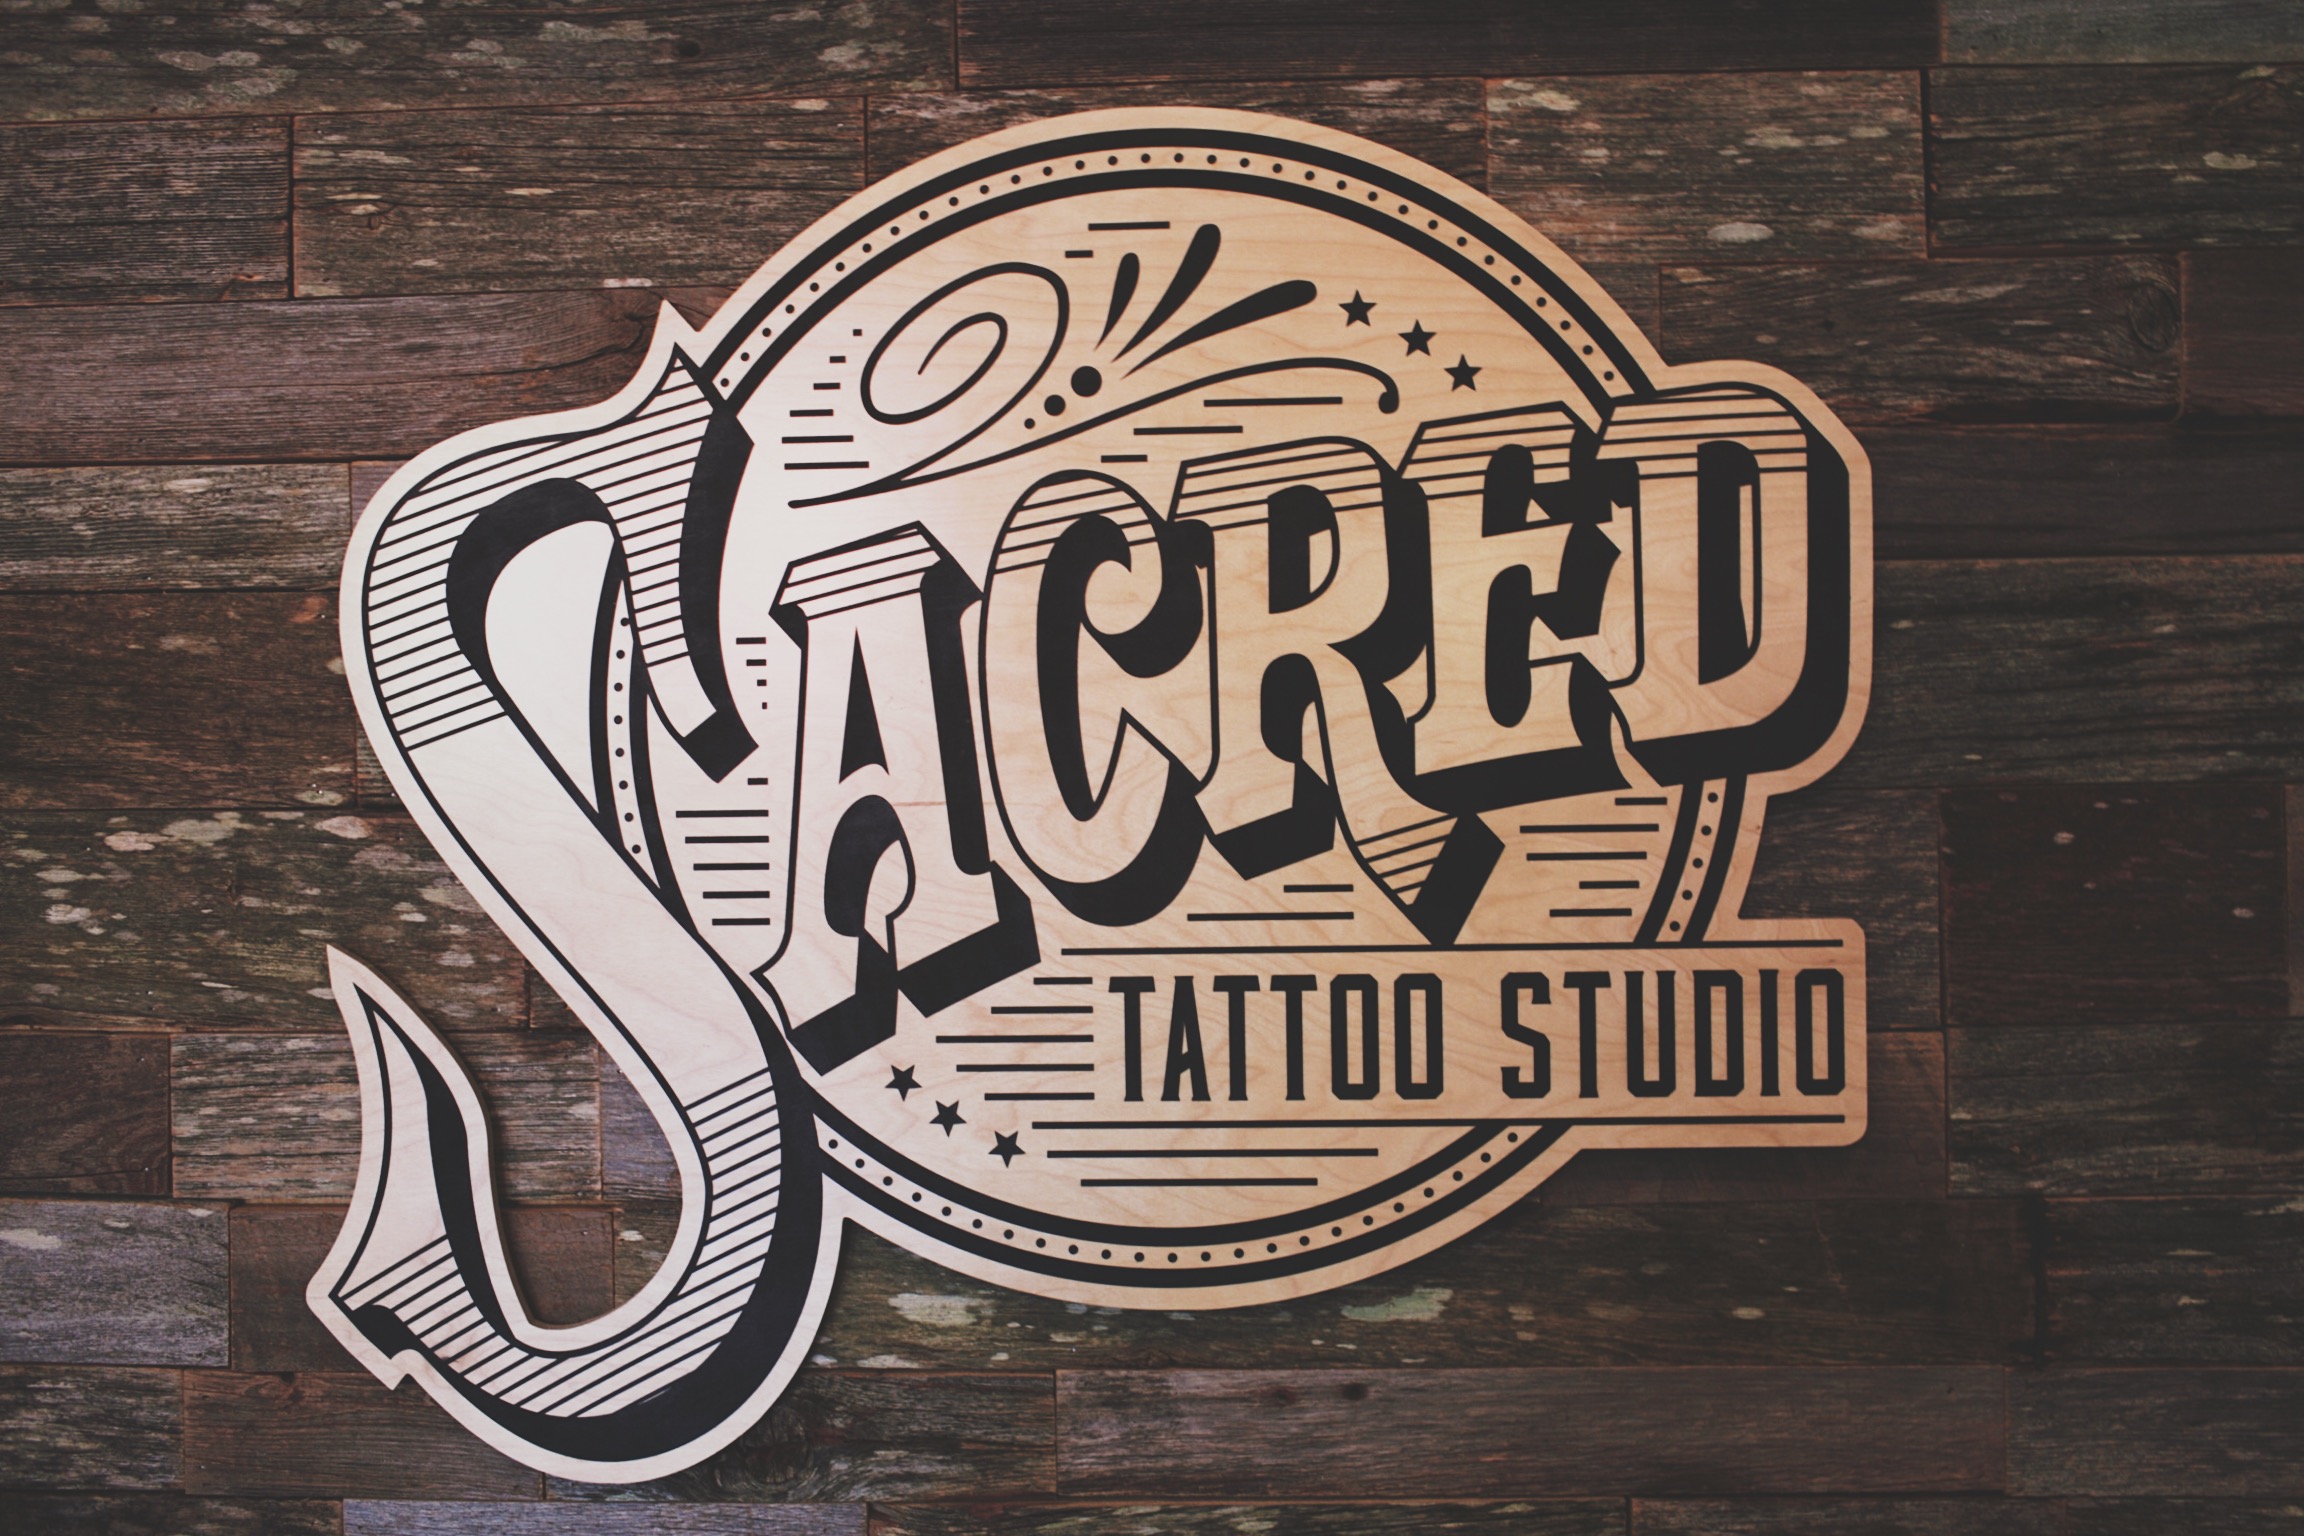 100,000 Tattoo studio logo Vector Images | Depositphotos